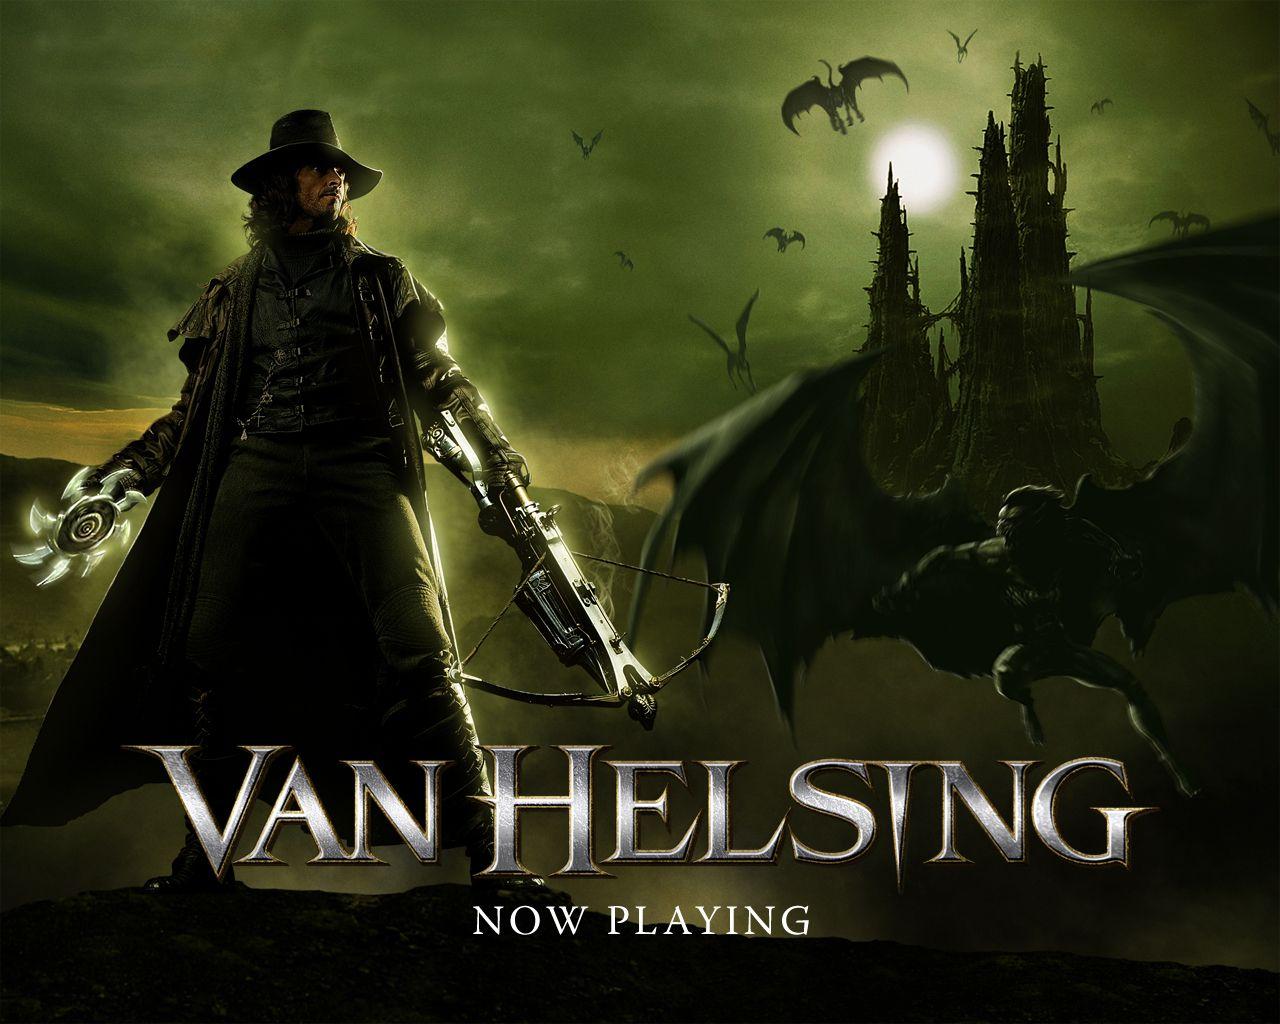 Van Helsing Wallpaper, Image, Wallpaper of Van Helsing in 4K